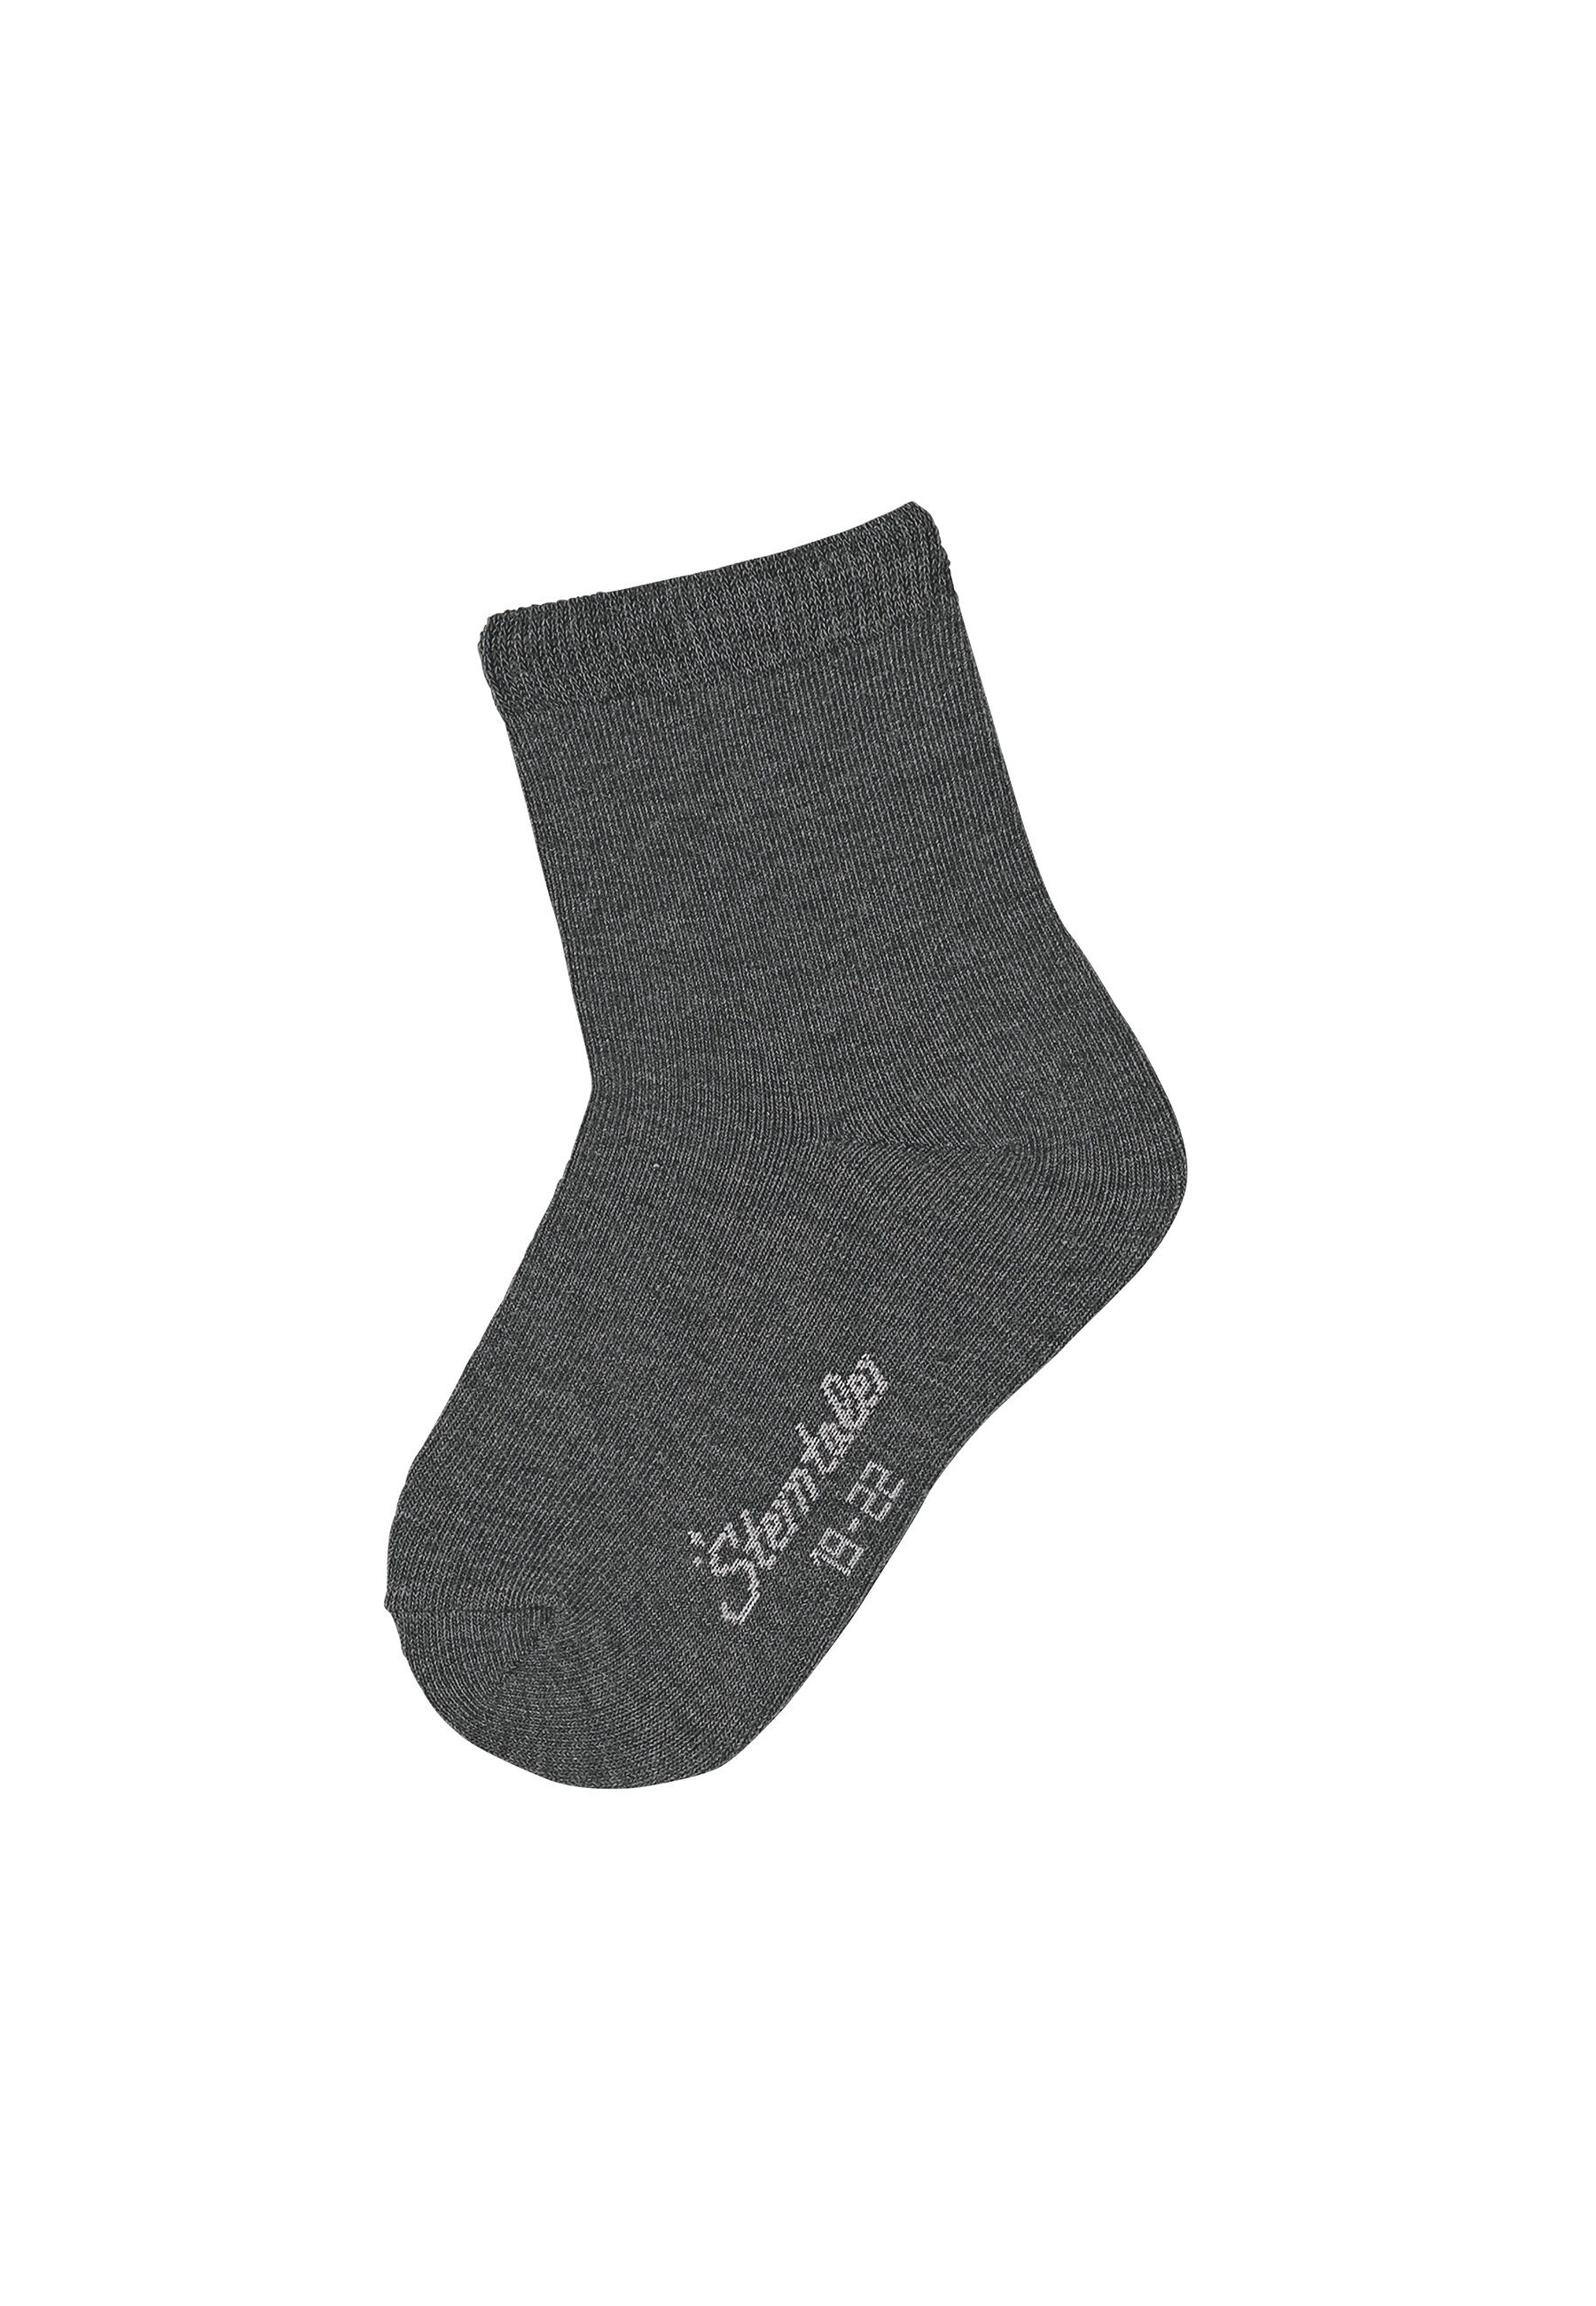 Kinder Jungen (Gr. 50 - 92) Sterntaler® Socken Söckchen uni